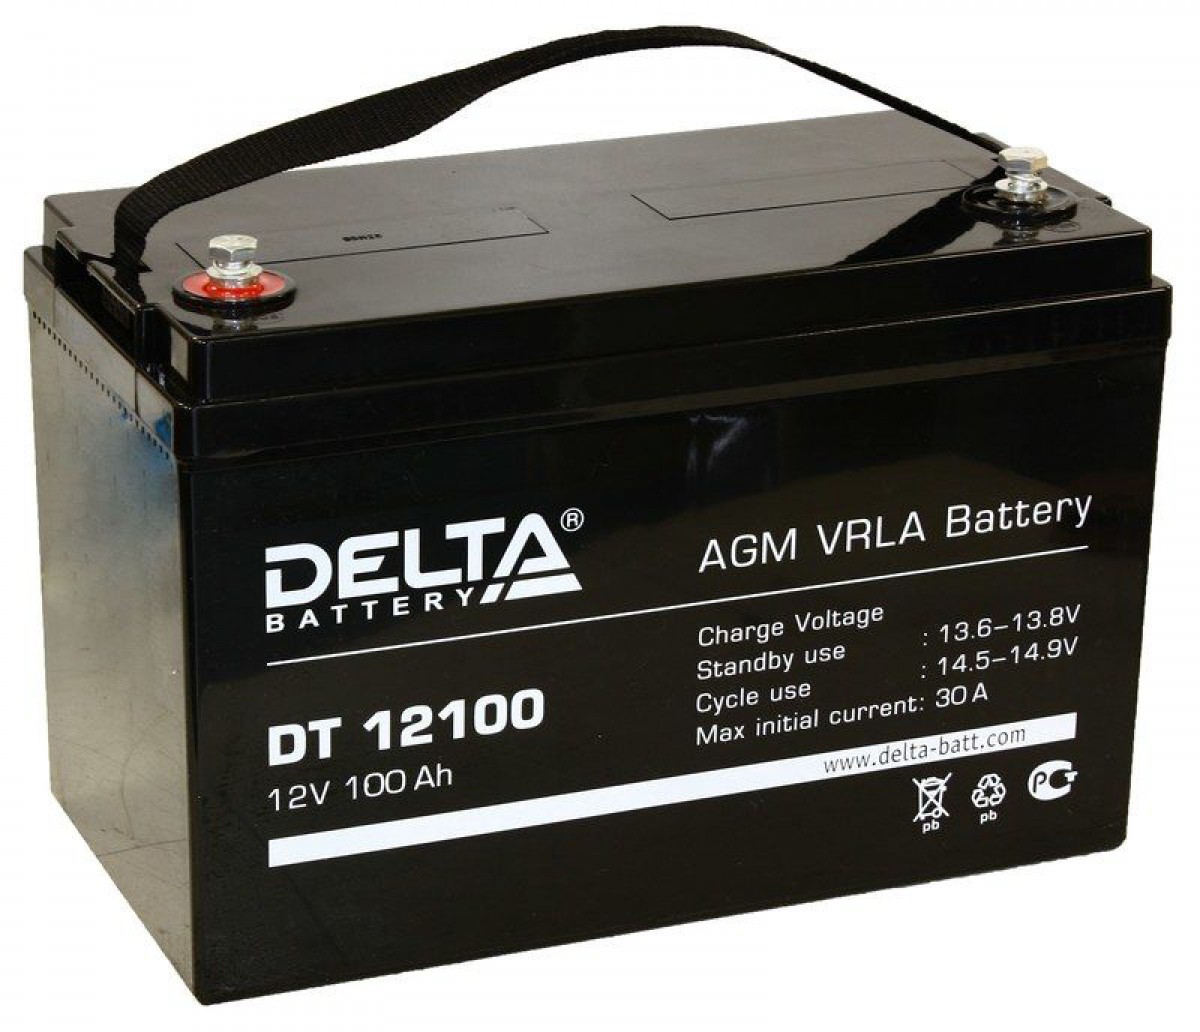 Аккумулятор 12в 4ач. Delta Battery DT 12100. Аккумуляторная батарея Delta DT 12100 (12v / 100ah). DT 12100 Delta аккумуляторная батарея. Delta 100 Ач 12 вольт DT 12100.